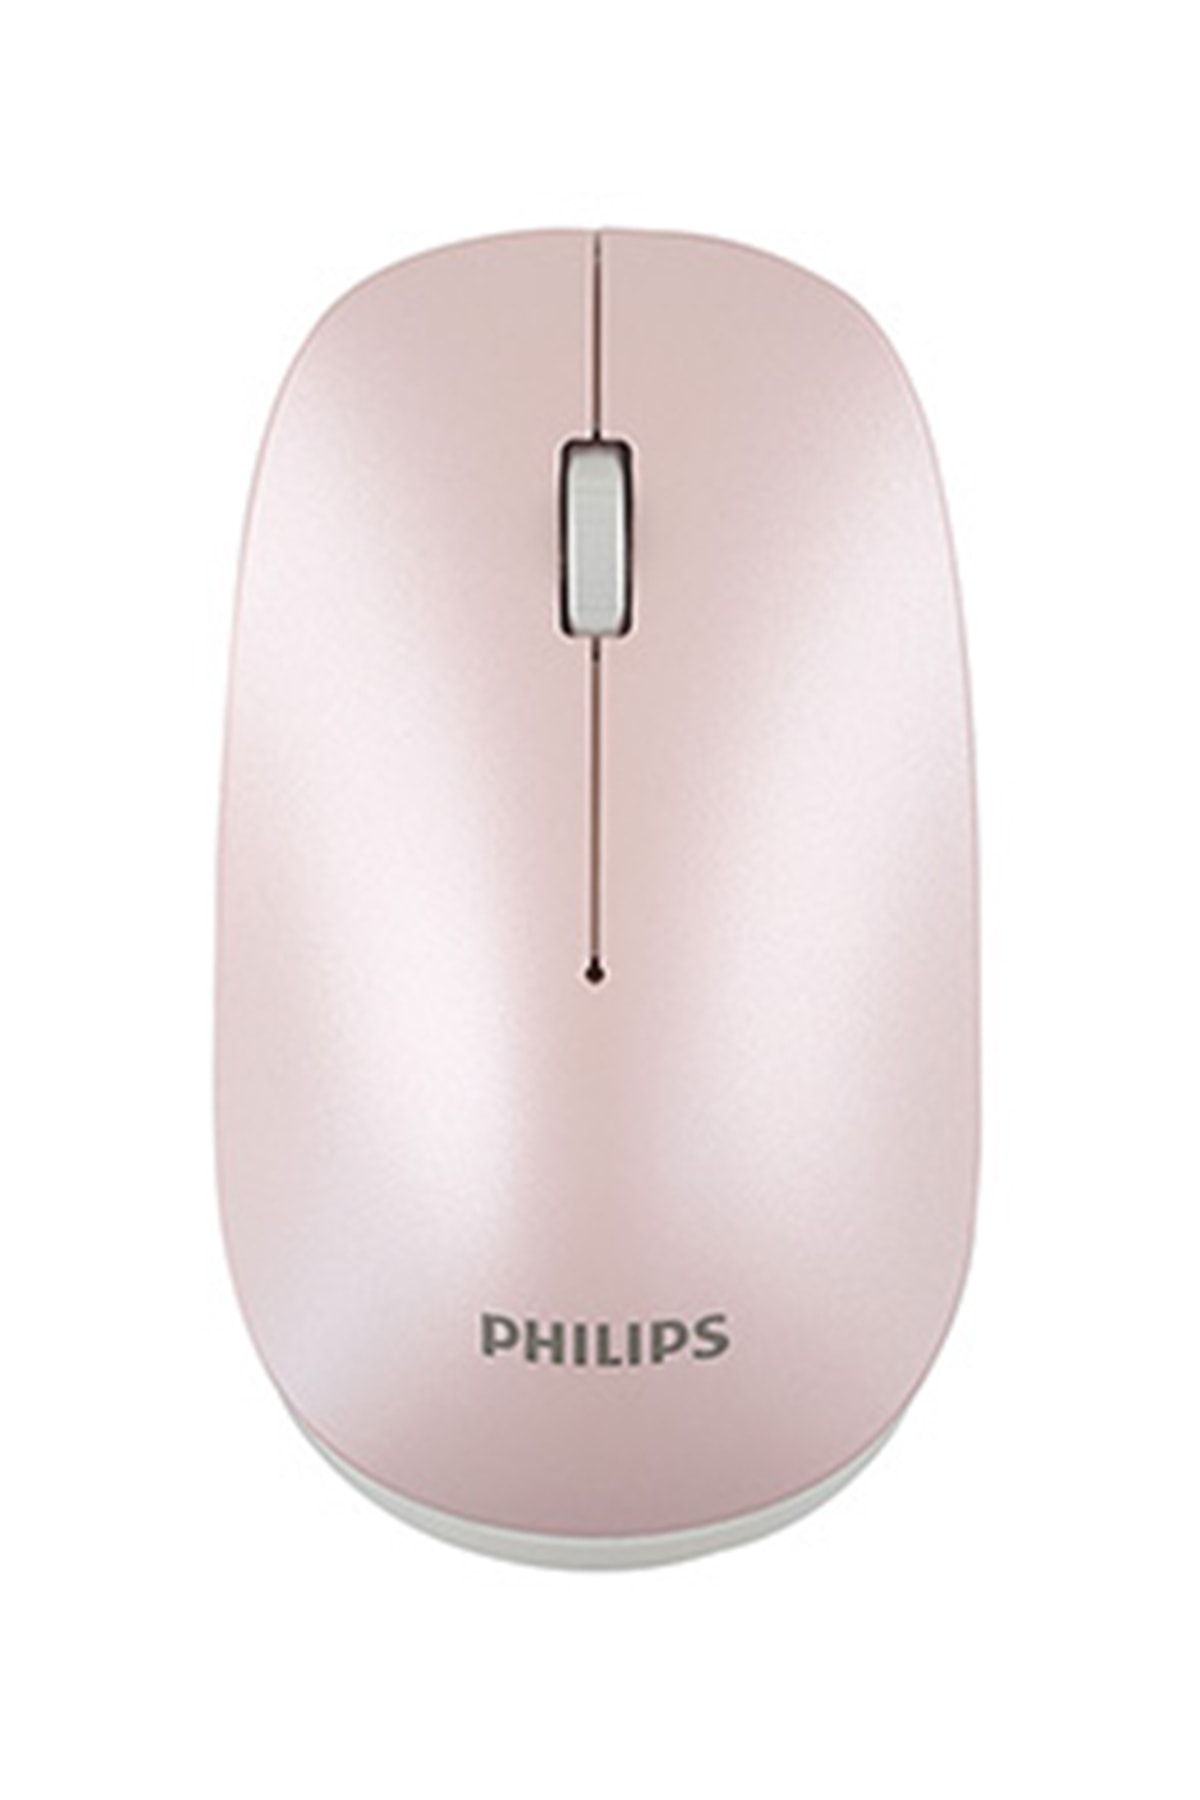 Philips Spk7305 2.4ghz Pembe 800/1000/1200/1600dpi Süper Sessiz Pembe Kablosuz Mouse